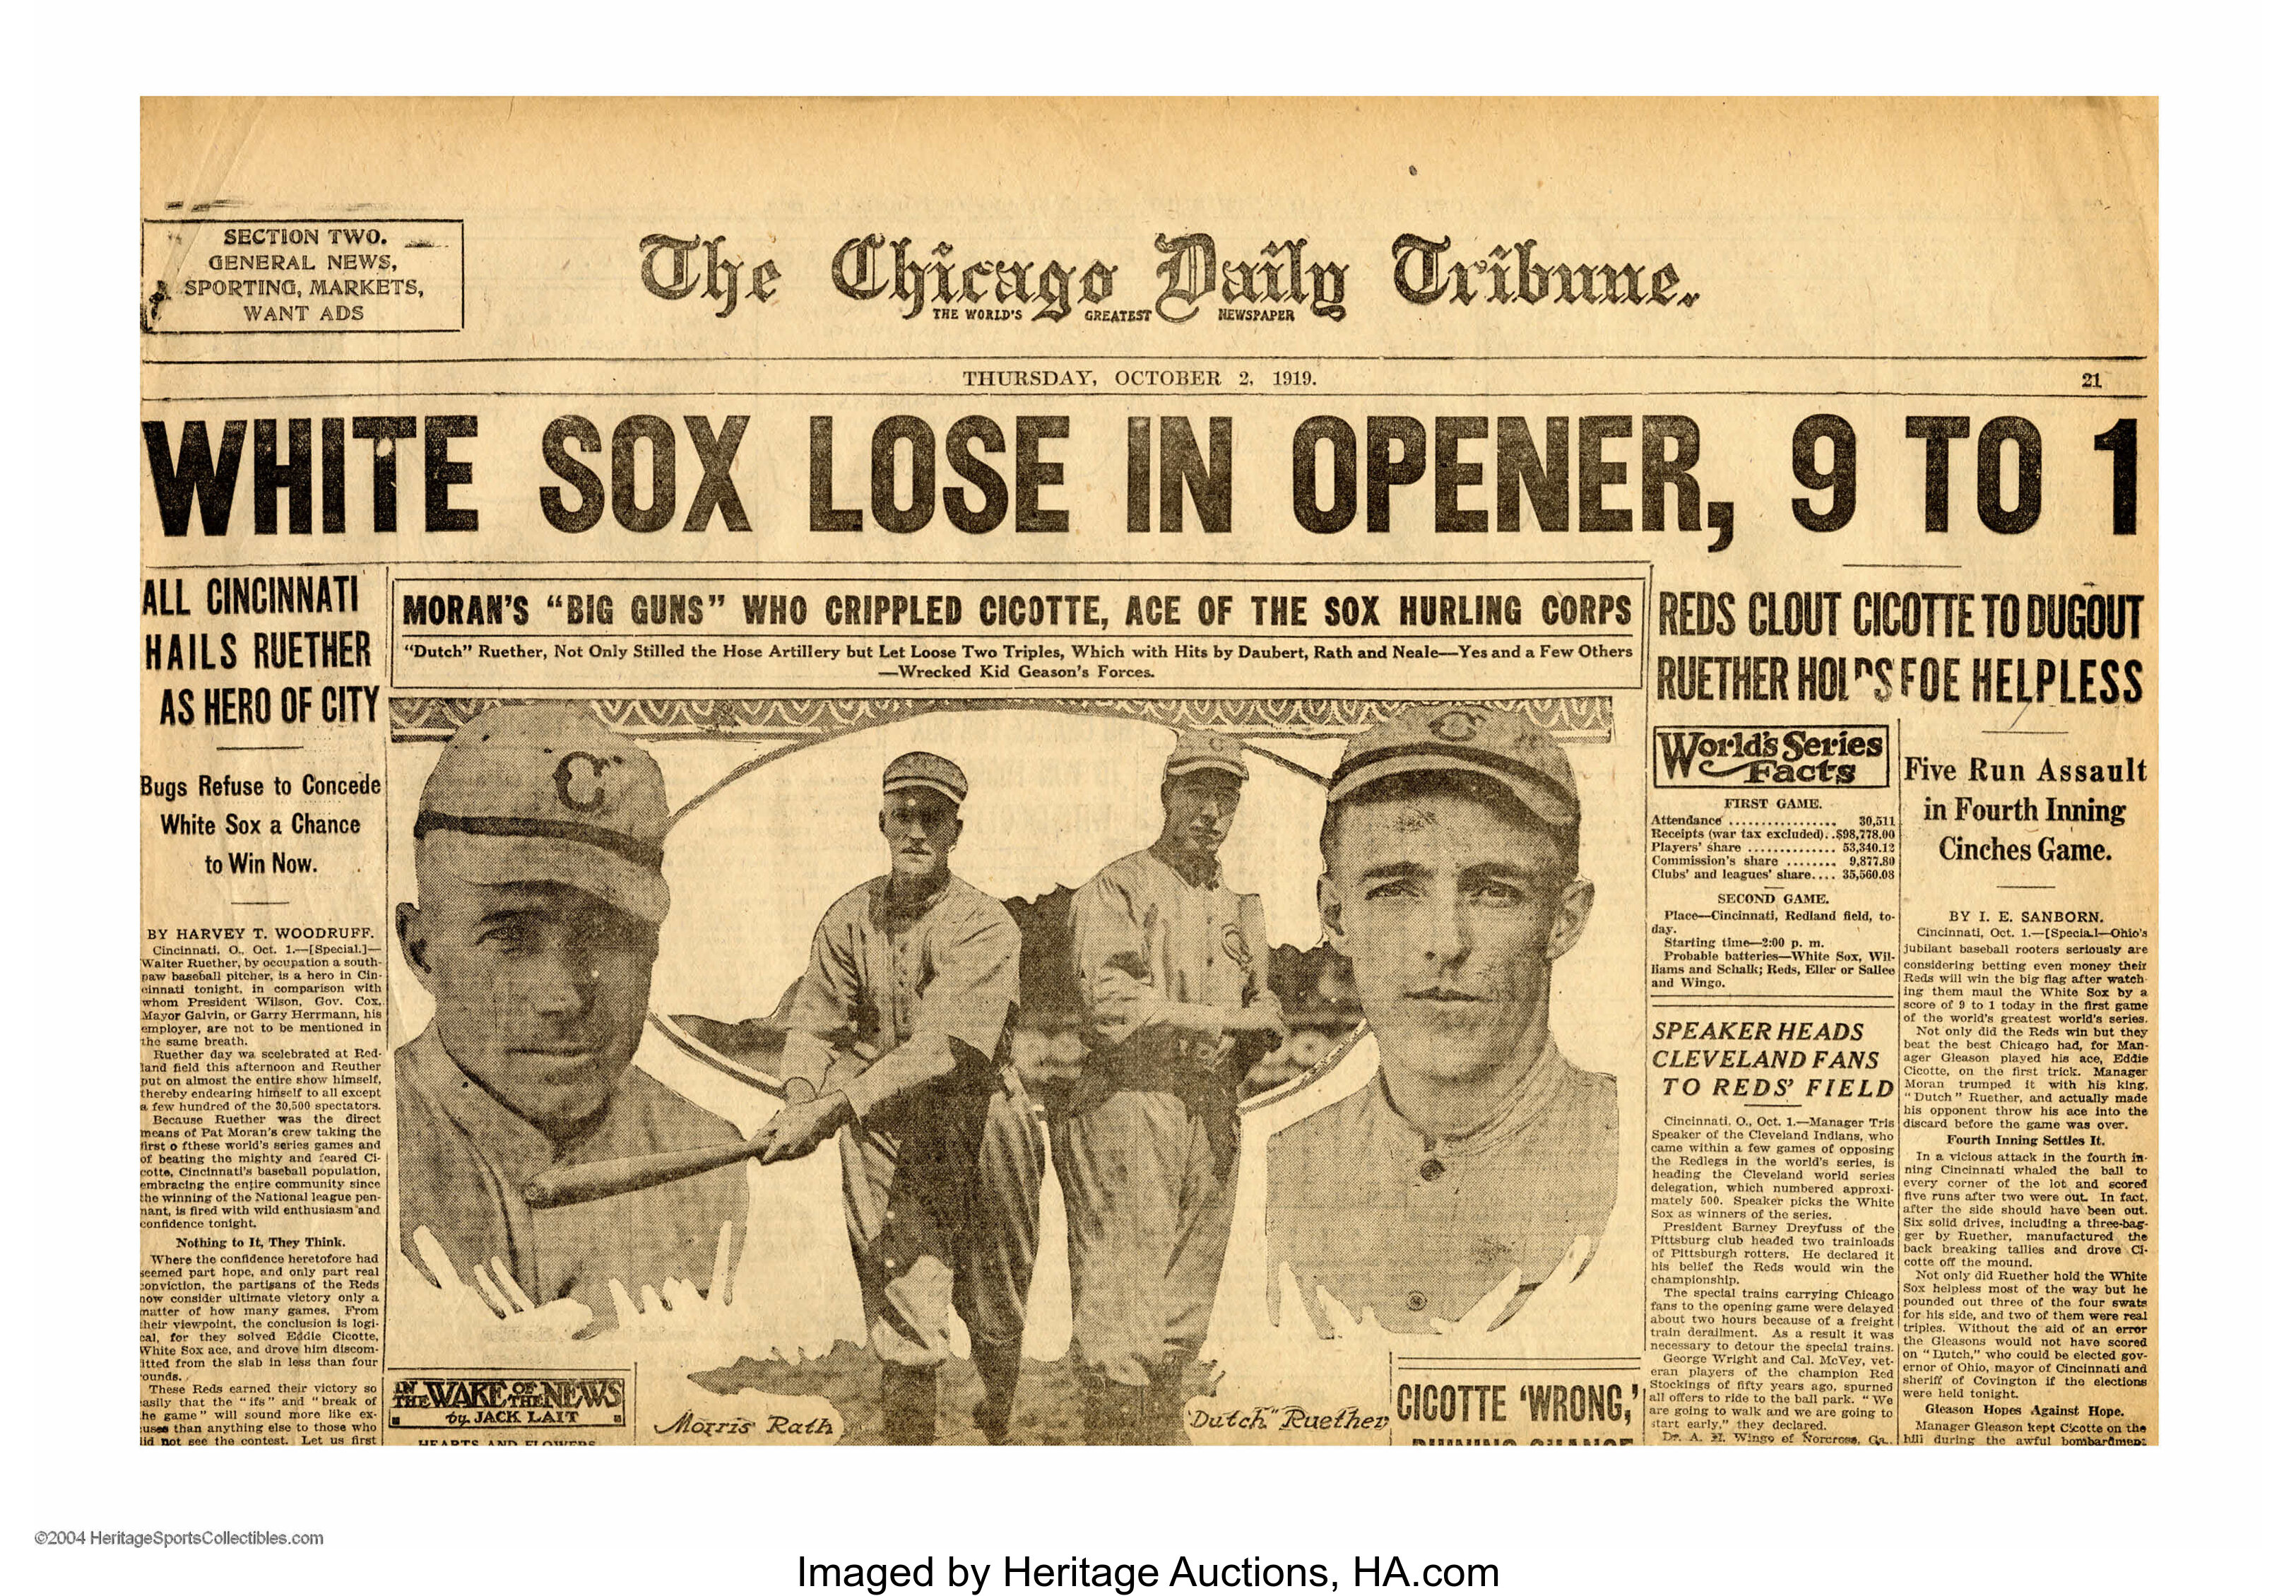 The 1919 Black Sox scandal